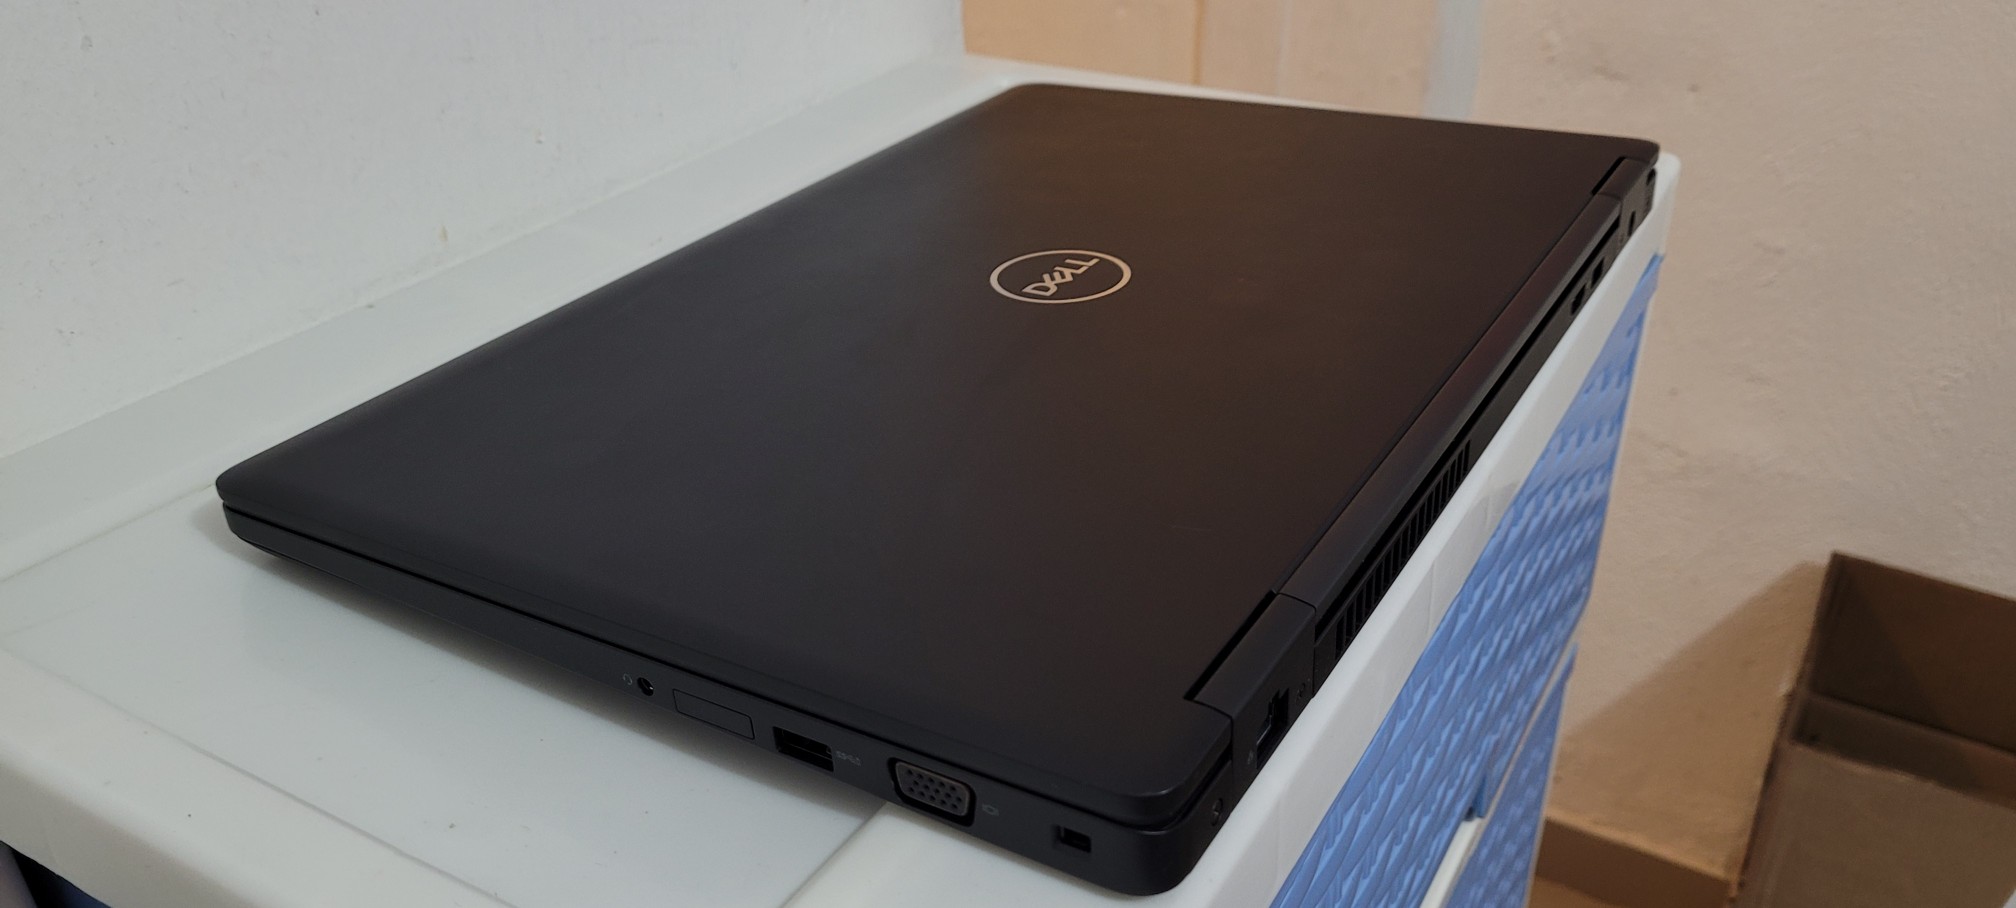 computadoras y laptops - Dell 5580 17 Pulg Core i5 7ma Ram 8gb ddr4 Disco 128gb SSD Solido 2